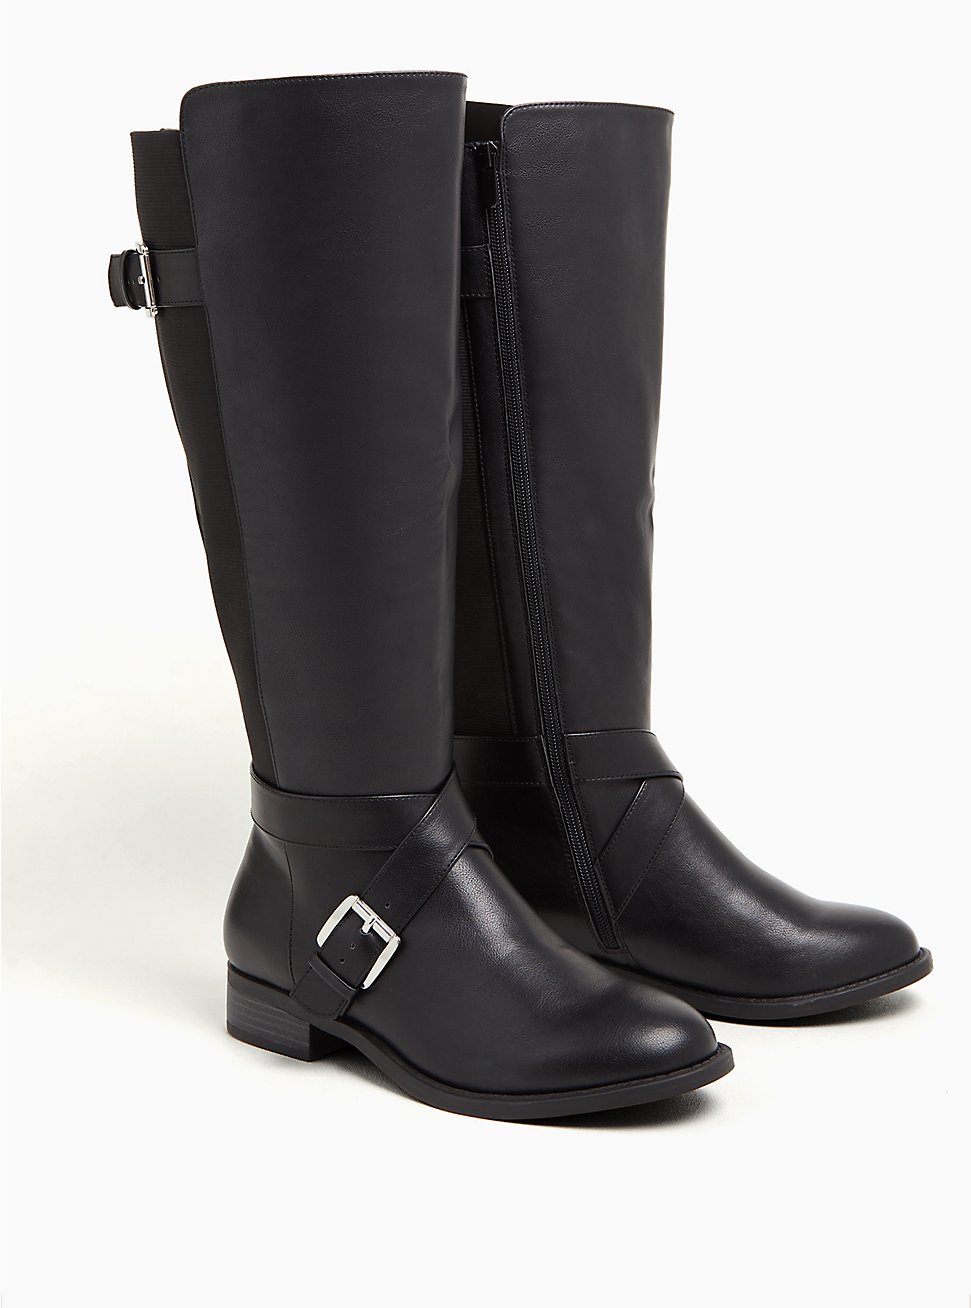 Womens Wellington Boots Buckle Slim Fit Tall Mid Calf Rain Soft Comfort UK 3-8 